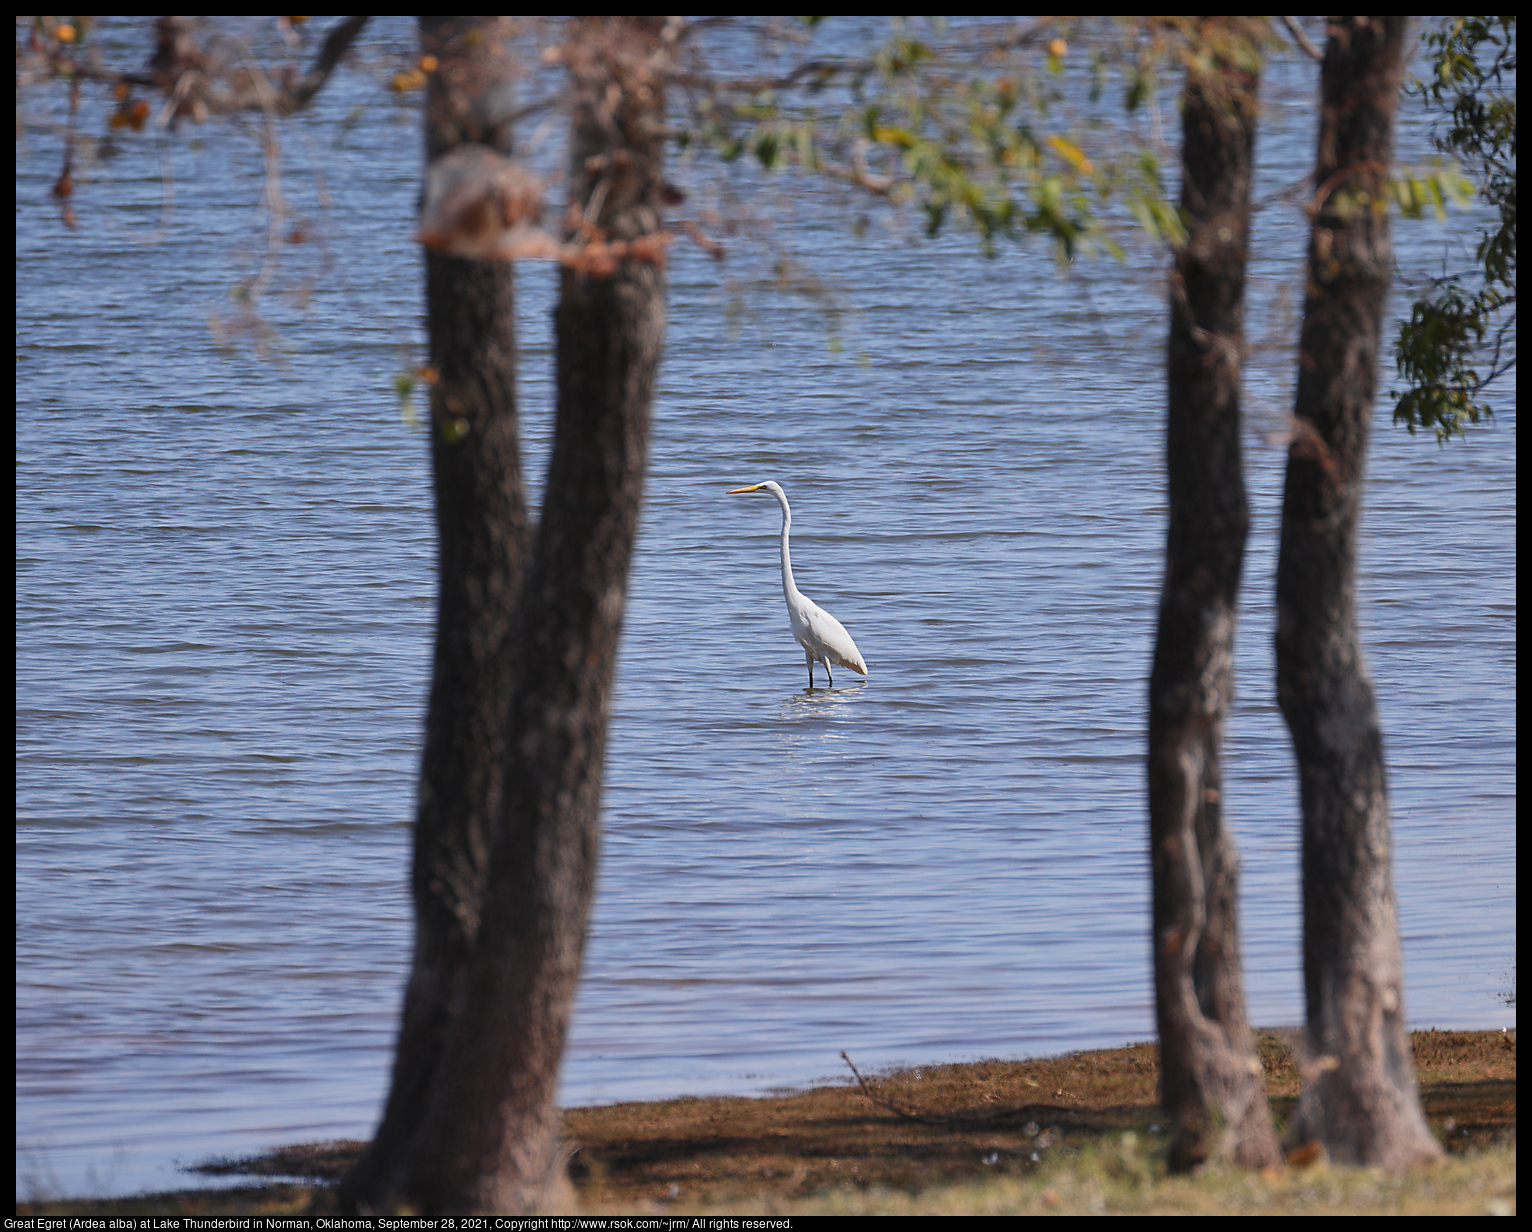 Great Egret (Ardea alba) at Lake Thunderbird in Norman, Oklahoma, September 28, 2021